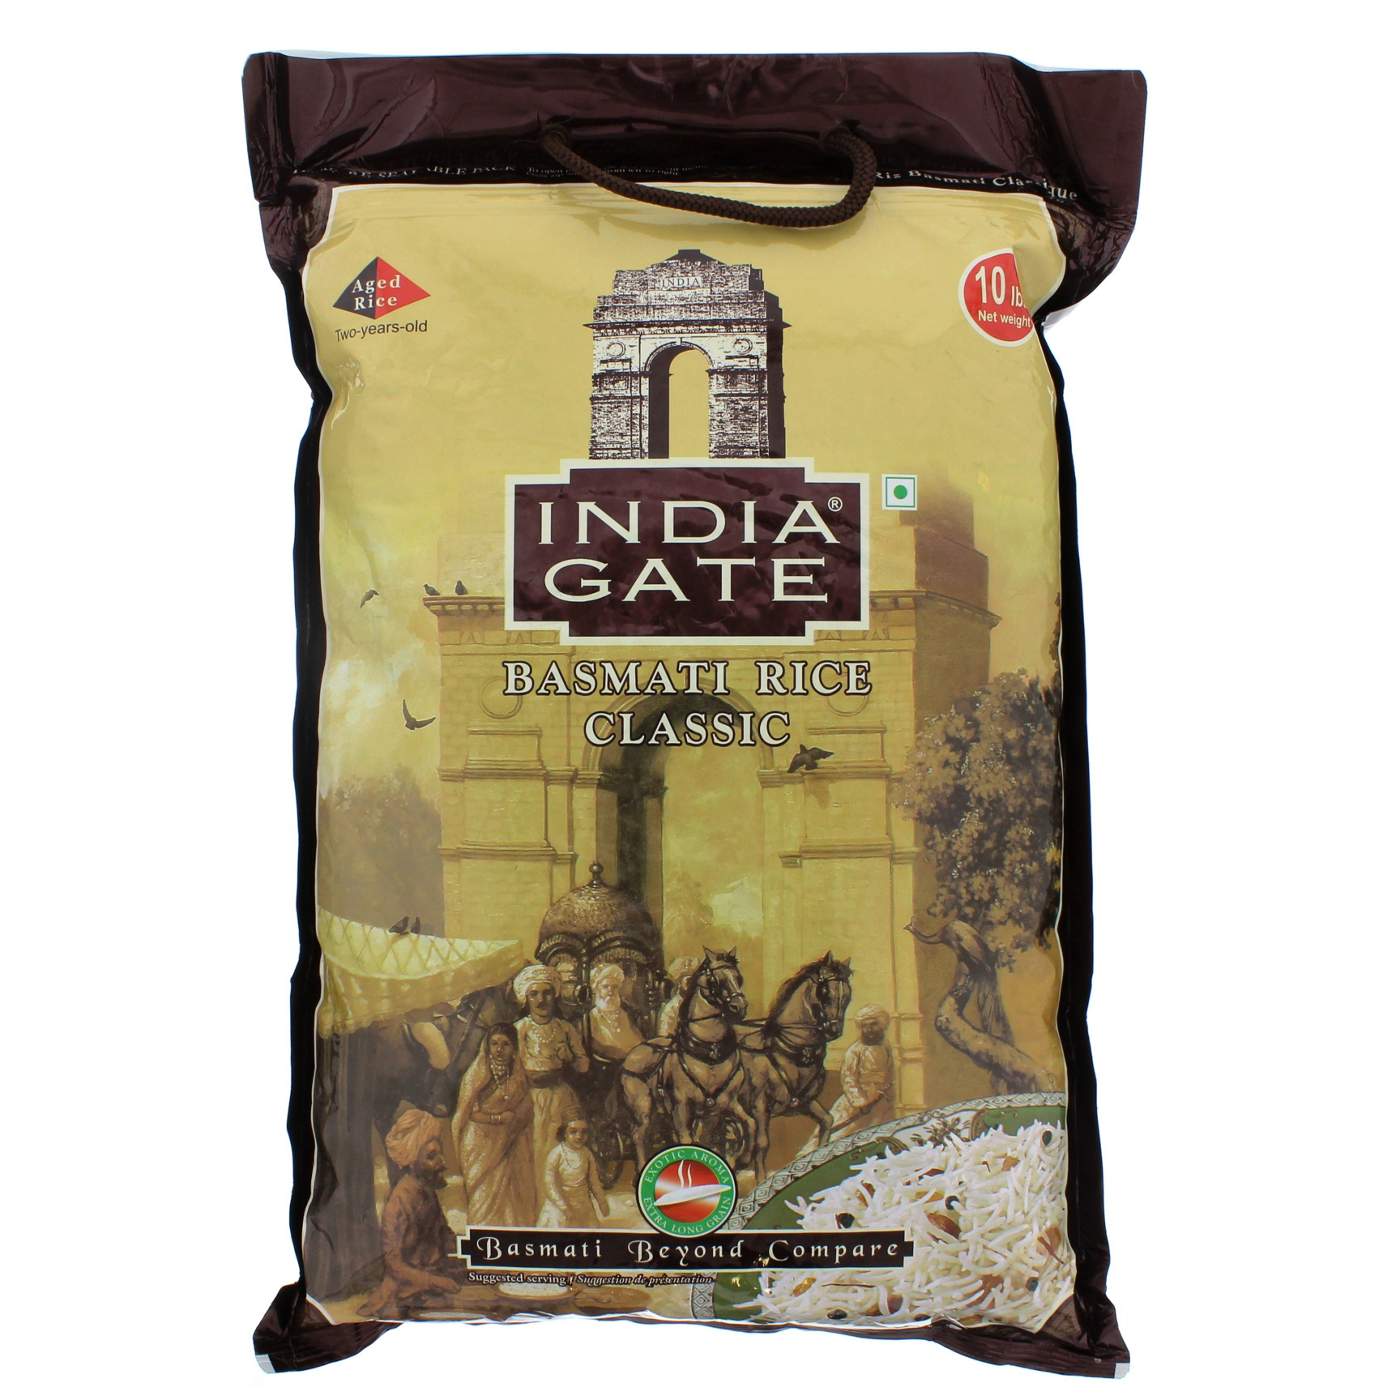 India Gate Classic Basmati Rice; image 1 of 2